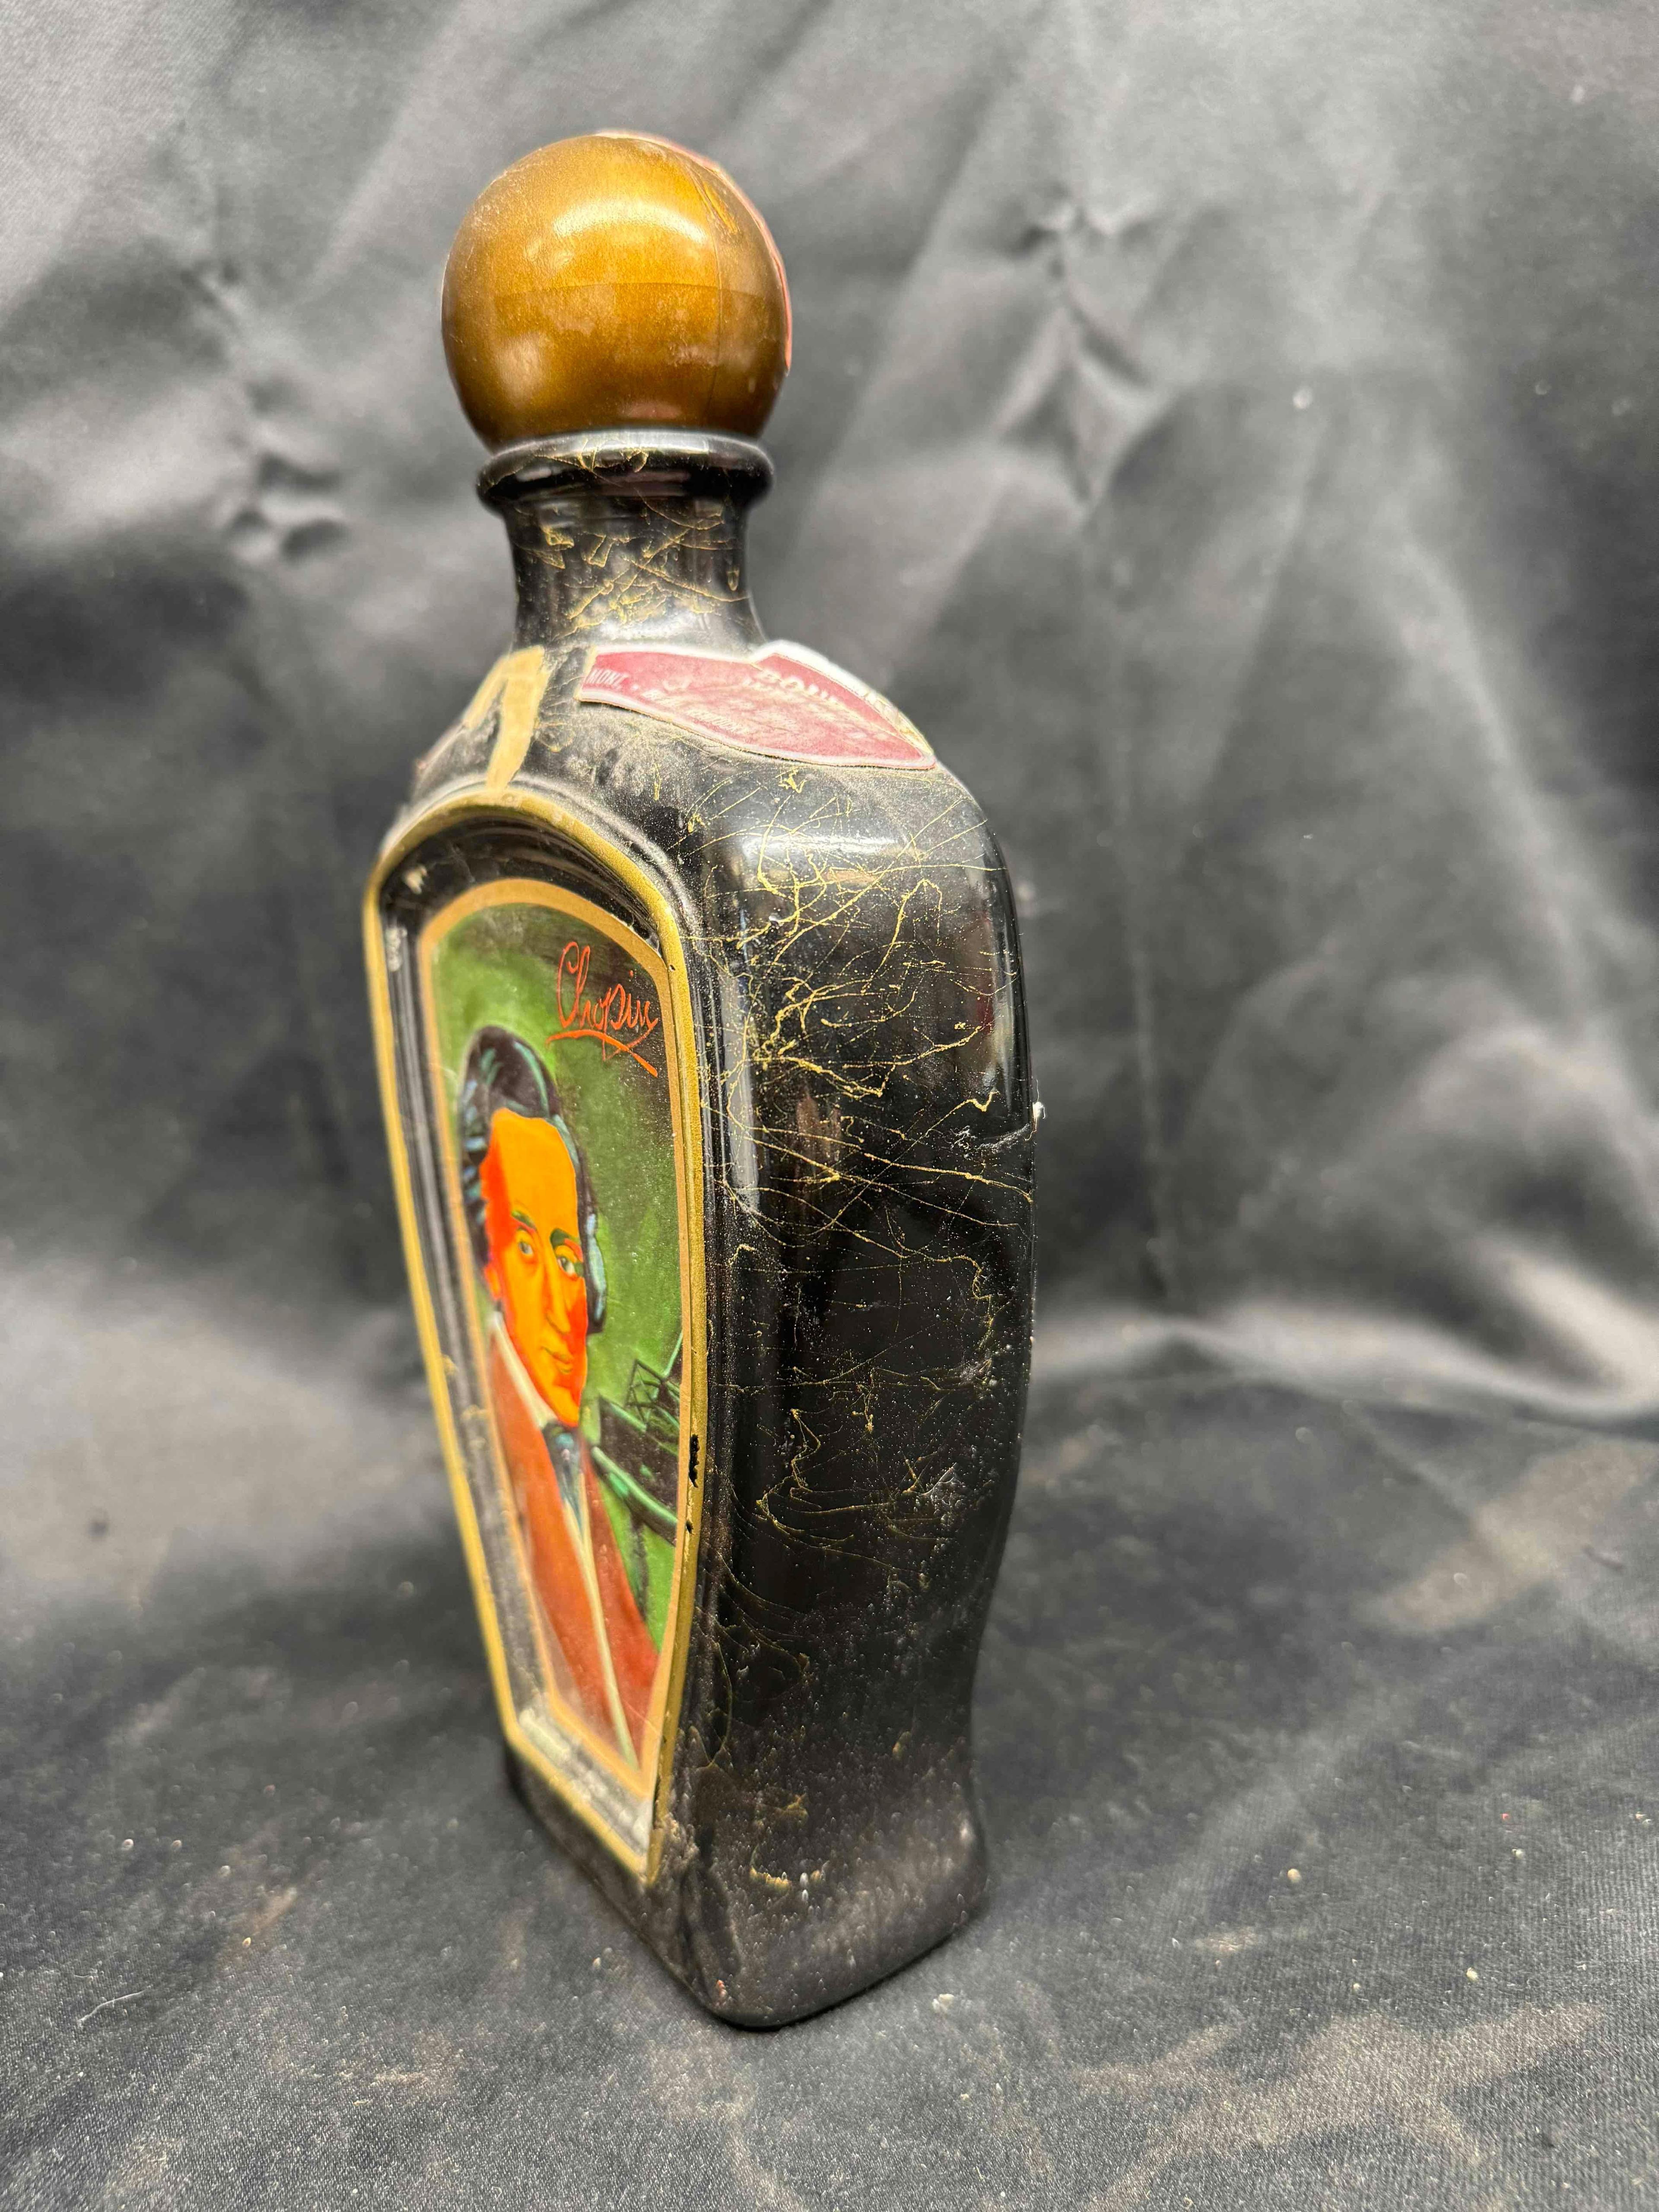 Vintage Jim Beam Series Glass Bottle Decanter Chopin beam choice 8yr Whiskey Art